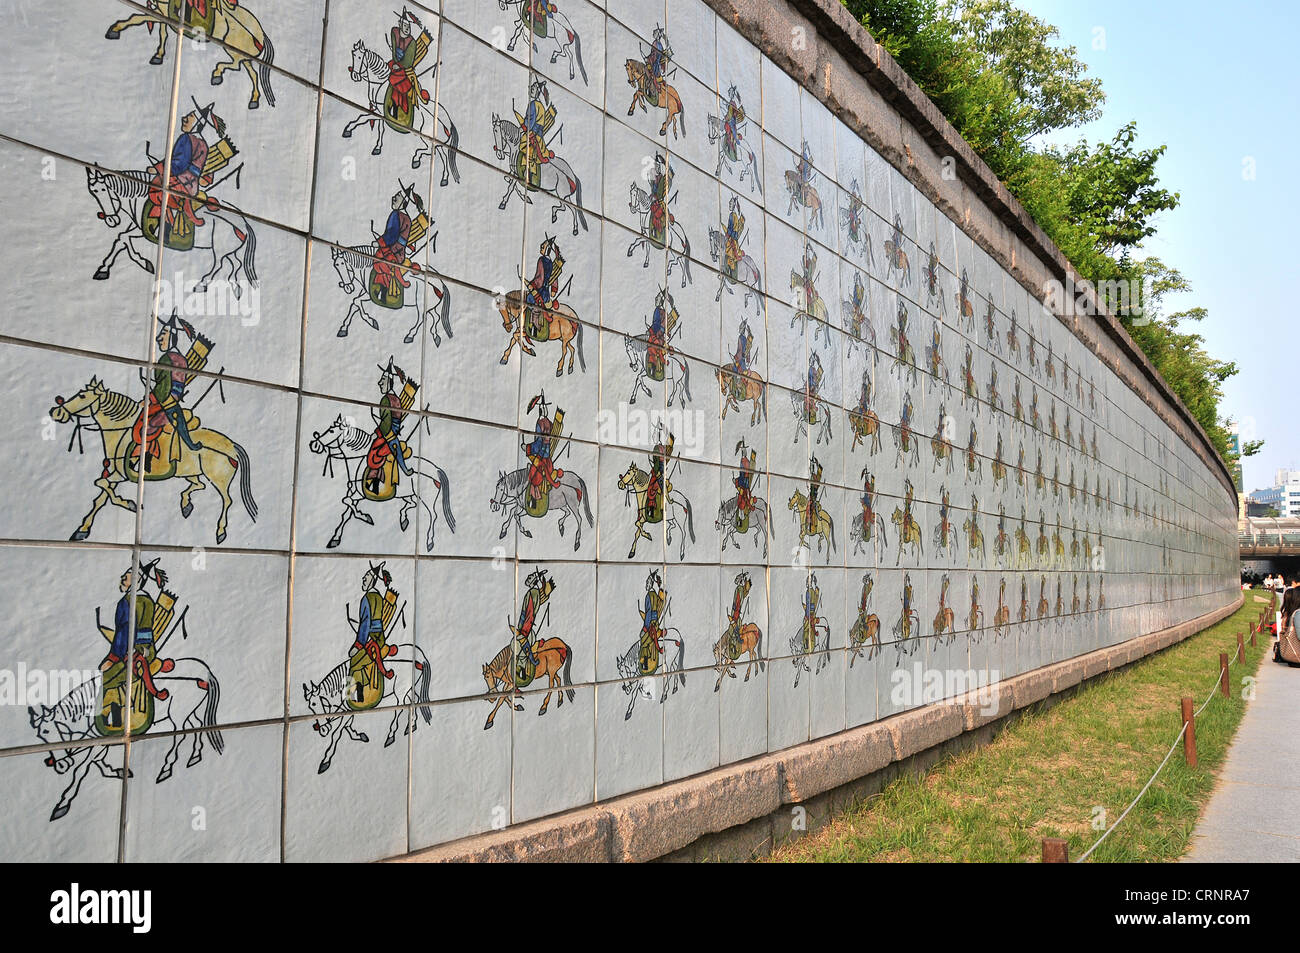 Mosaic of a historic Royak procession Palanquin for king Jeongio Cheonggyecheon river Seoul South Korea Stock Photo